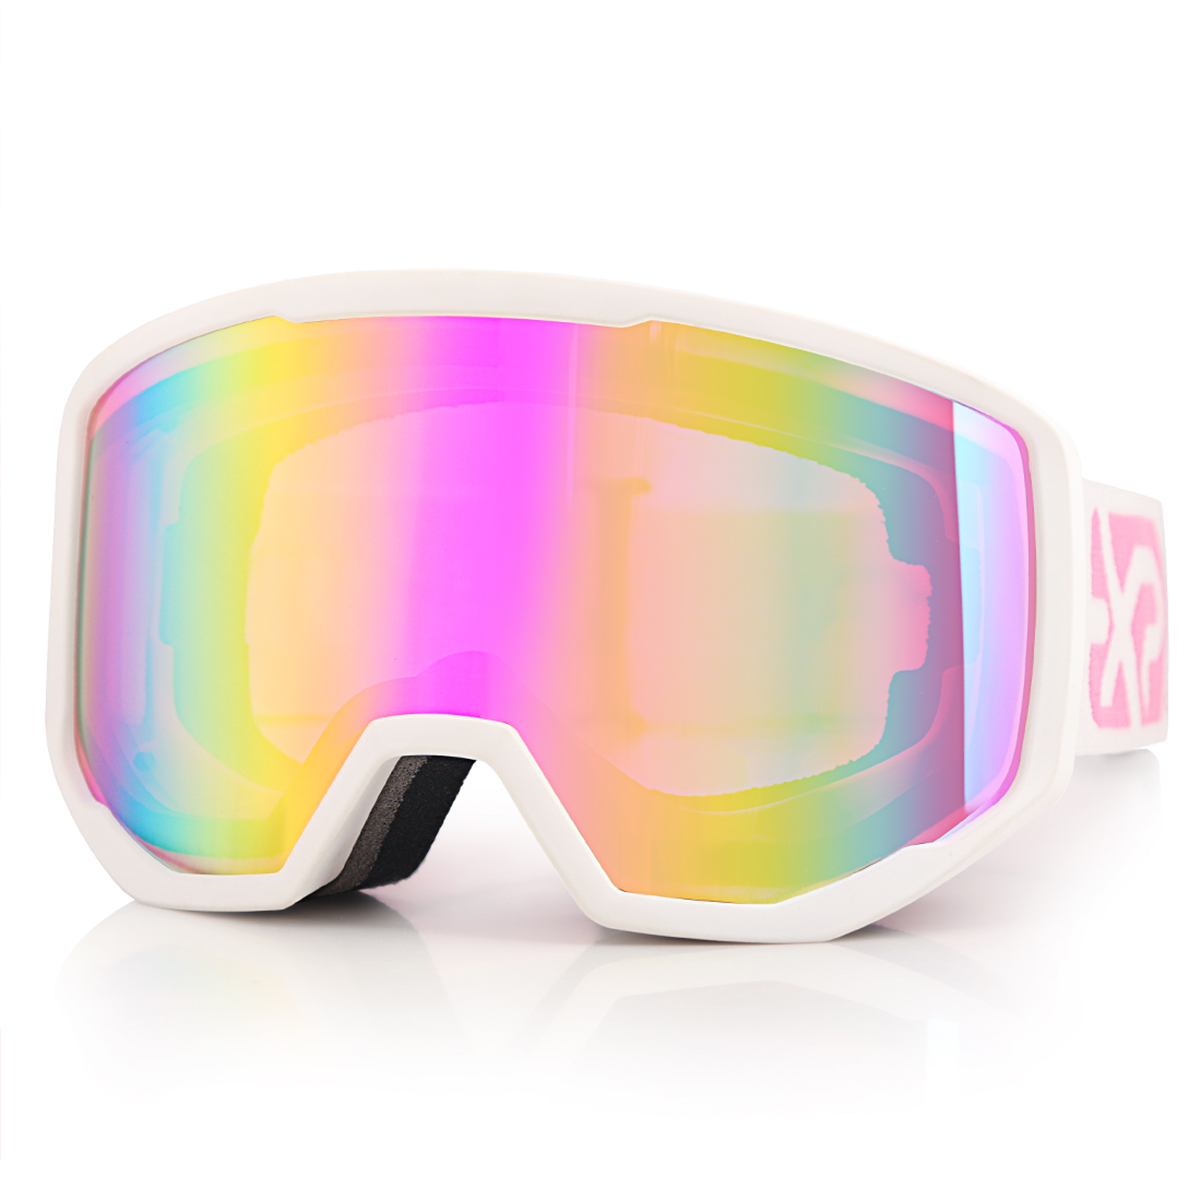 Ski Goggles Snowboard for Men Women, OTG Anti Fog UV Protection Snow Goggles